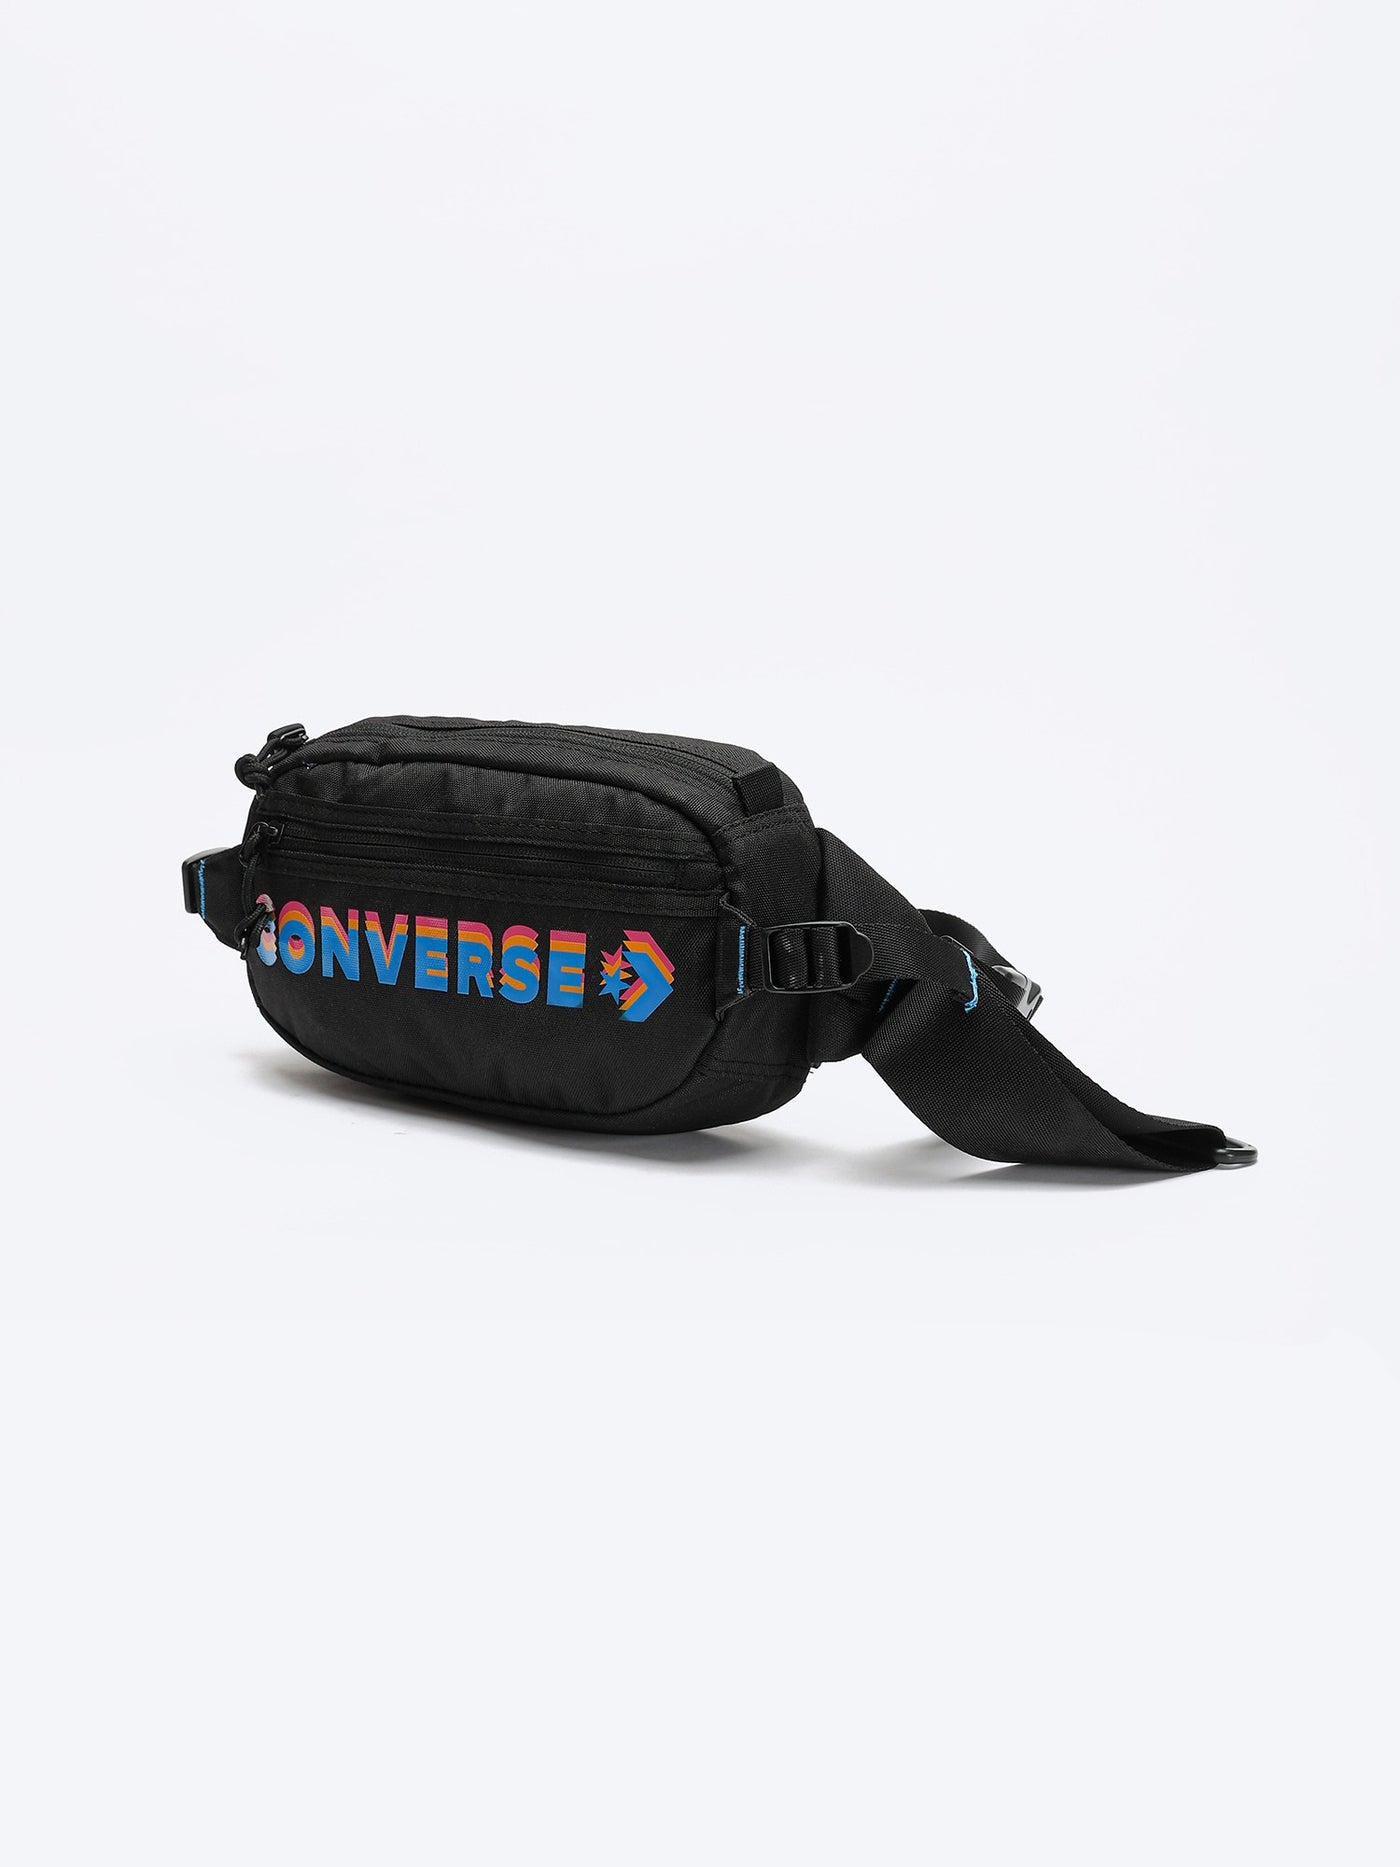 Unisex Waist Bag - "Colorful Converse" Logo